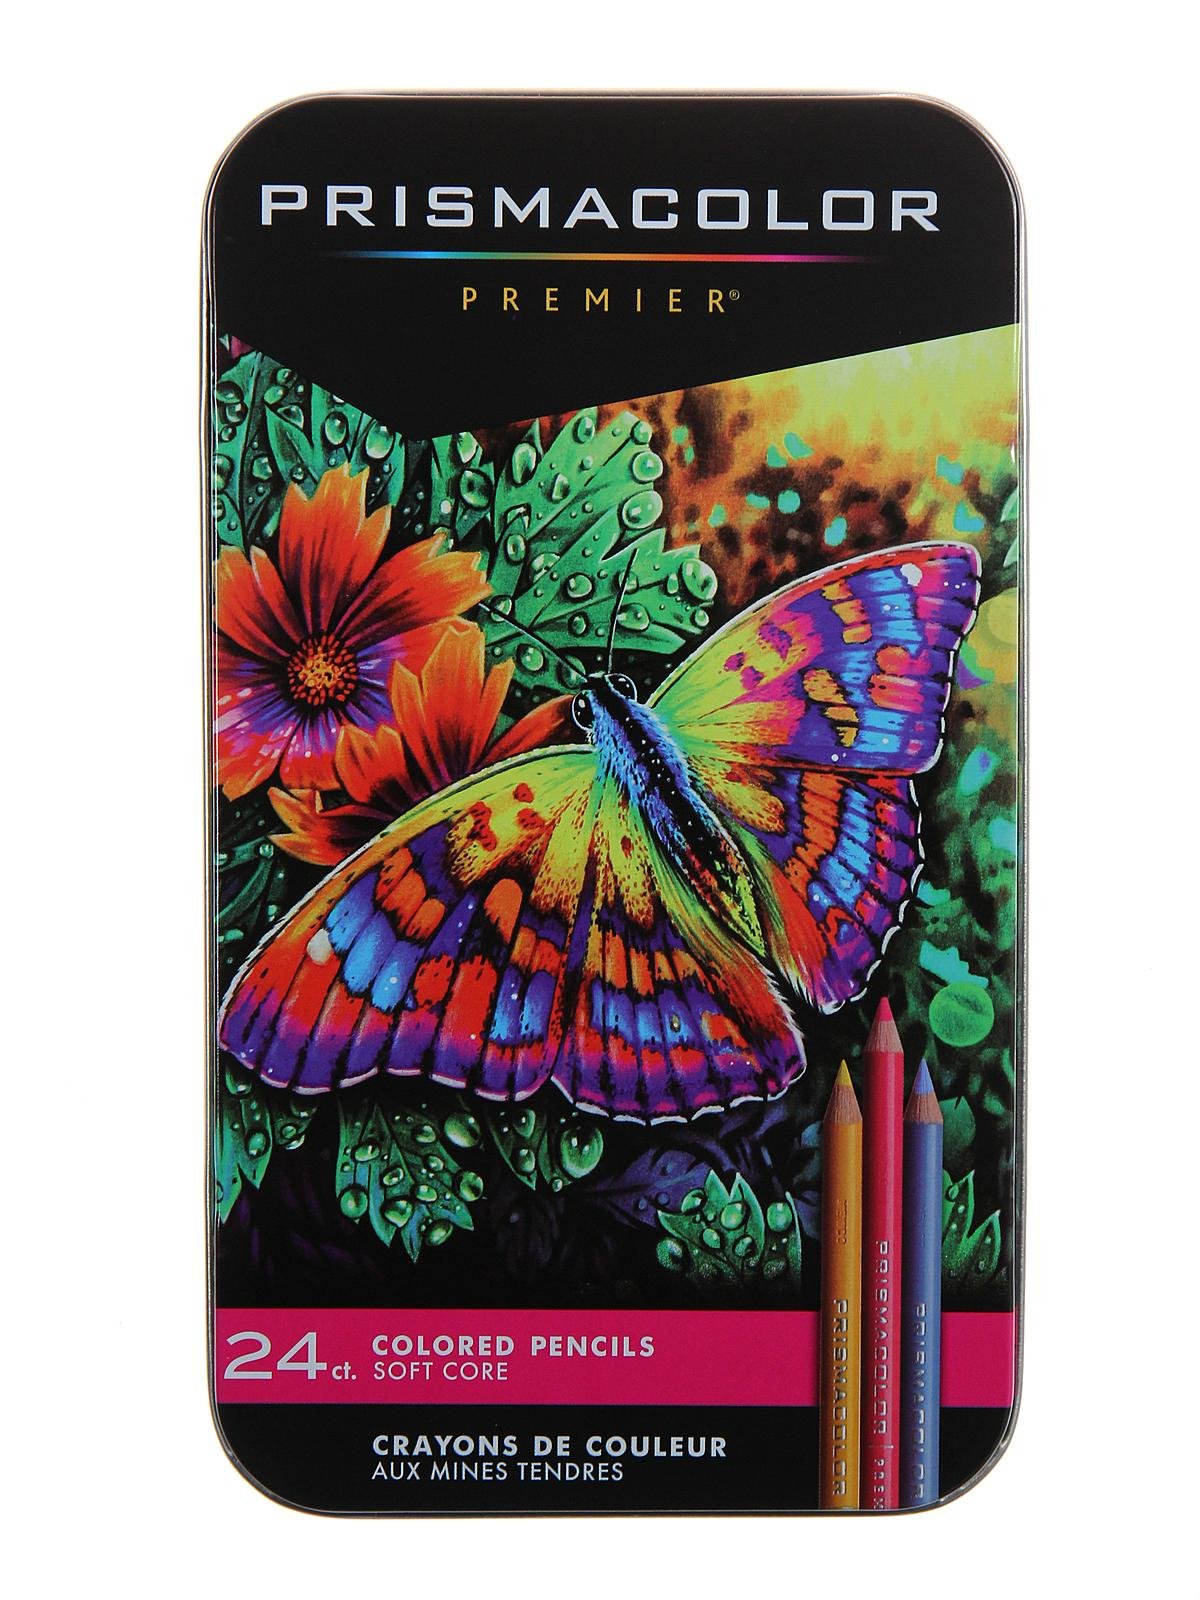 Prismacolor Premier Colored Pencils Metal Tin Gift Set 24 - Missing one  pencil